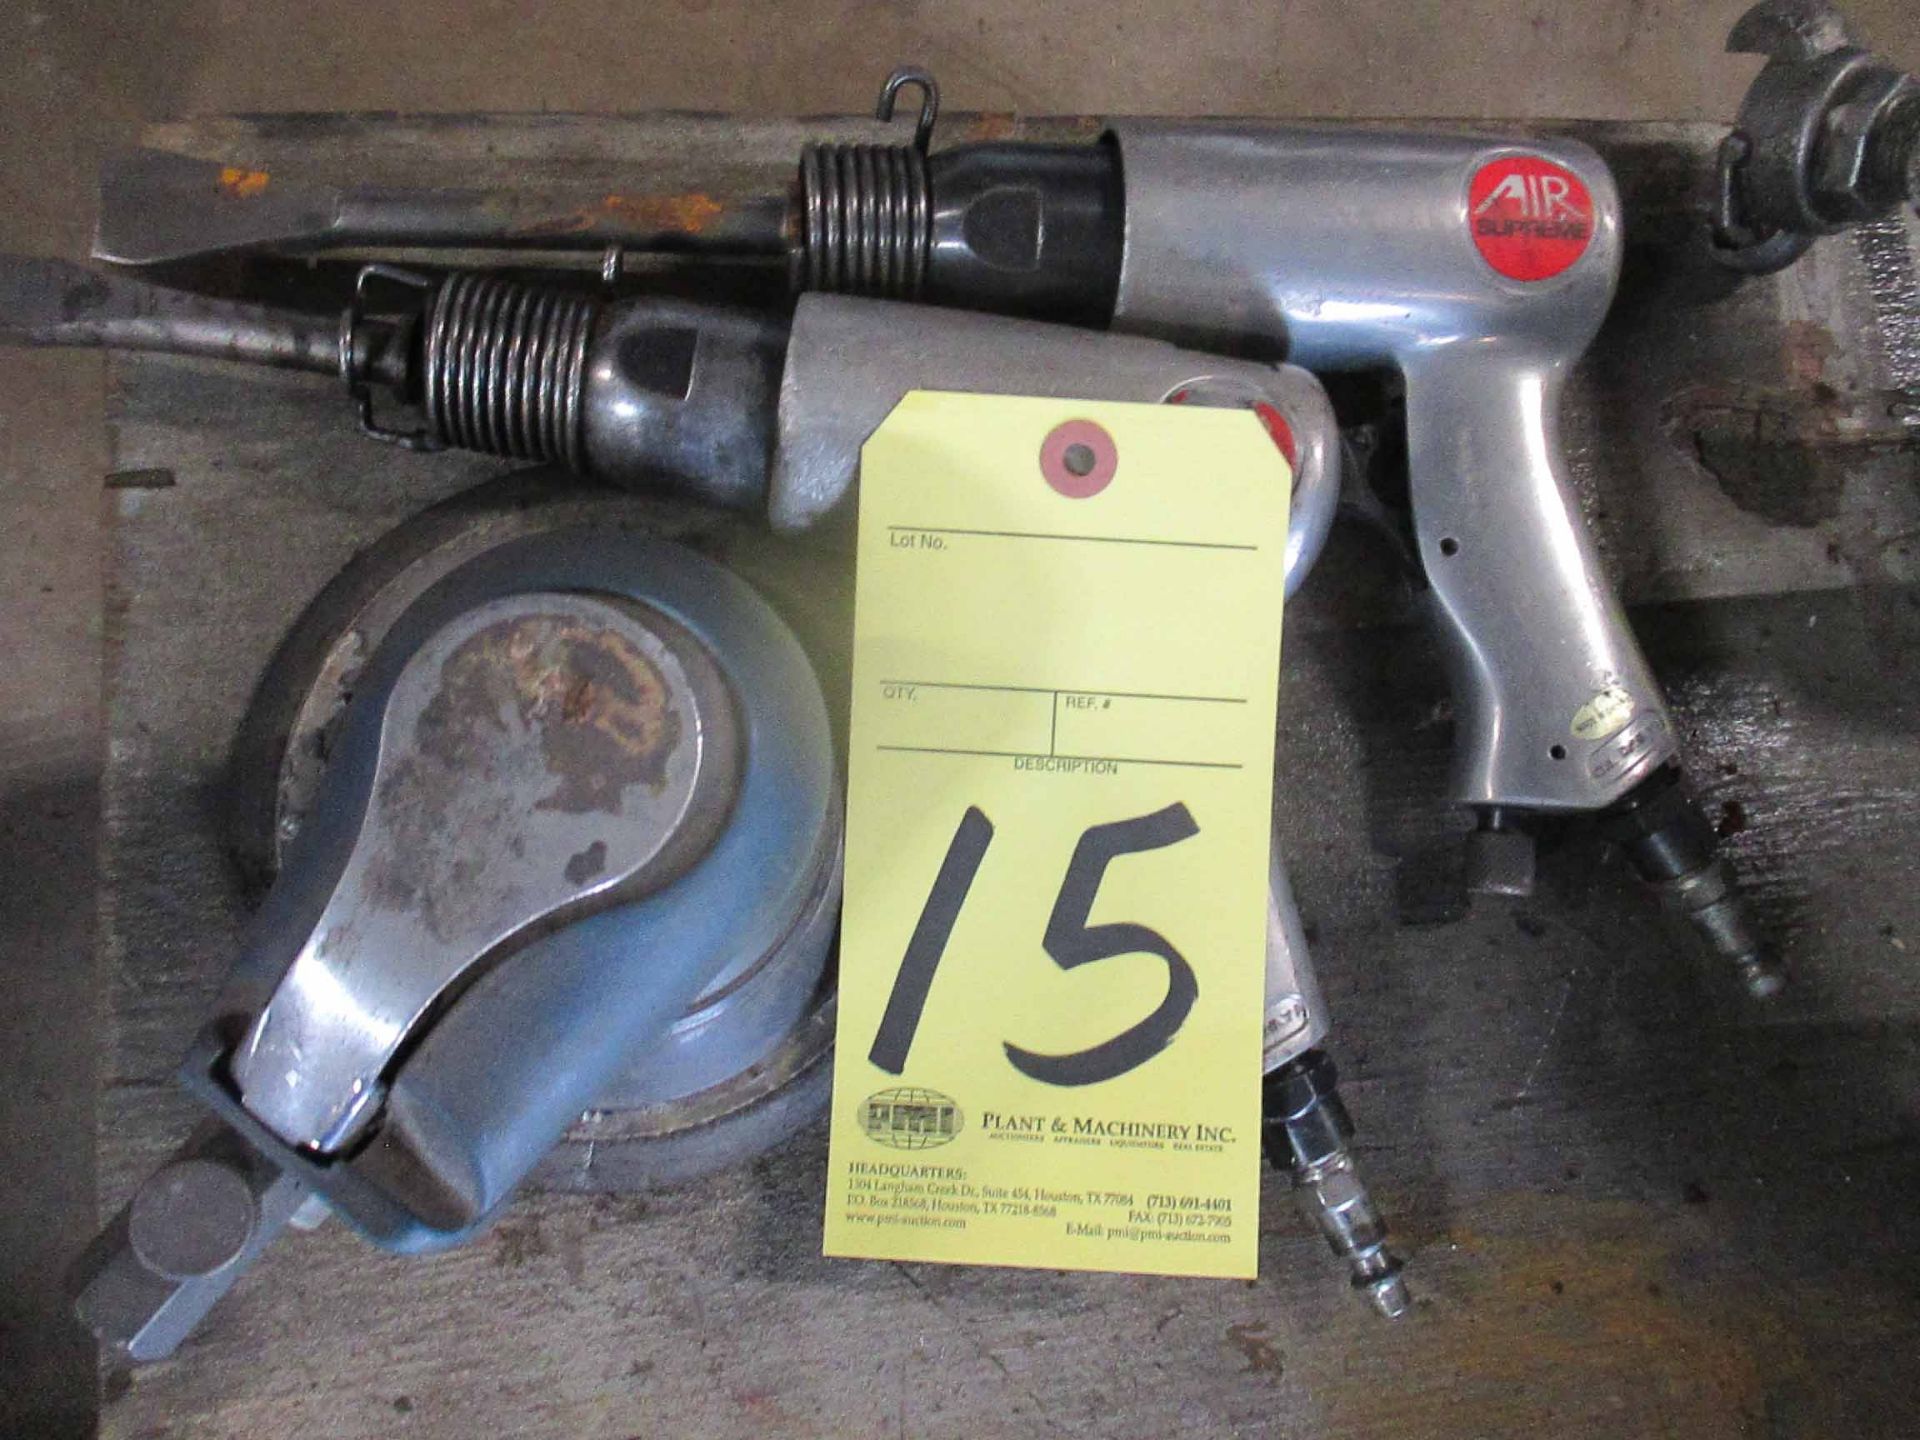 LOT CONSISTING OF: pneu. tools, hammers, sanders, etc.